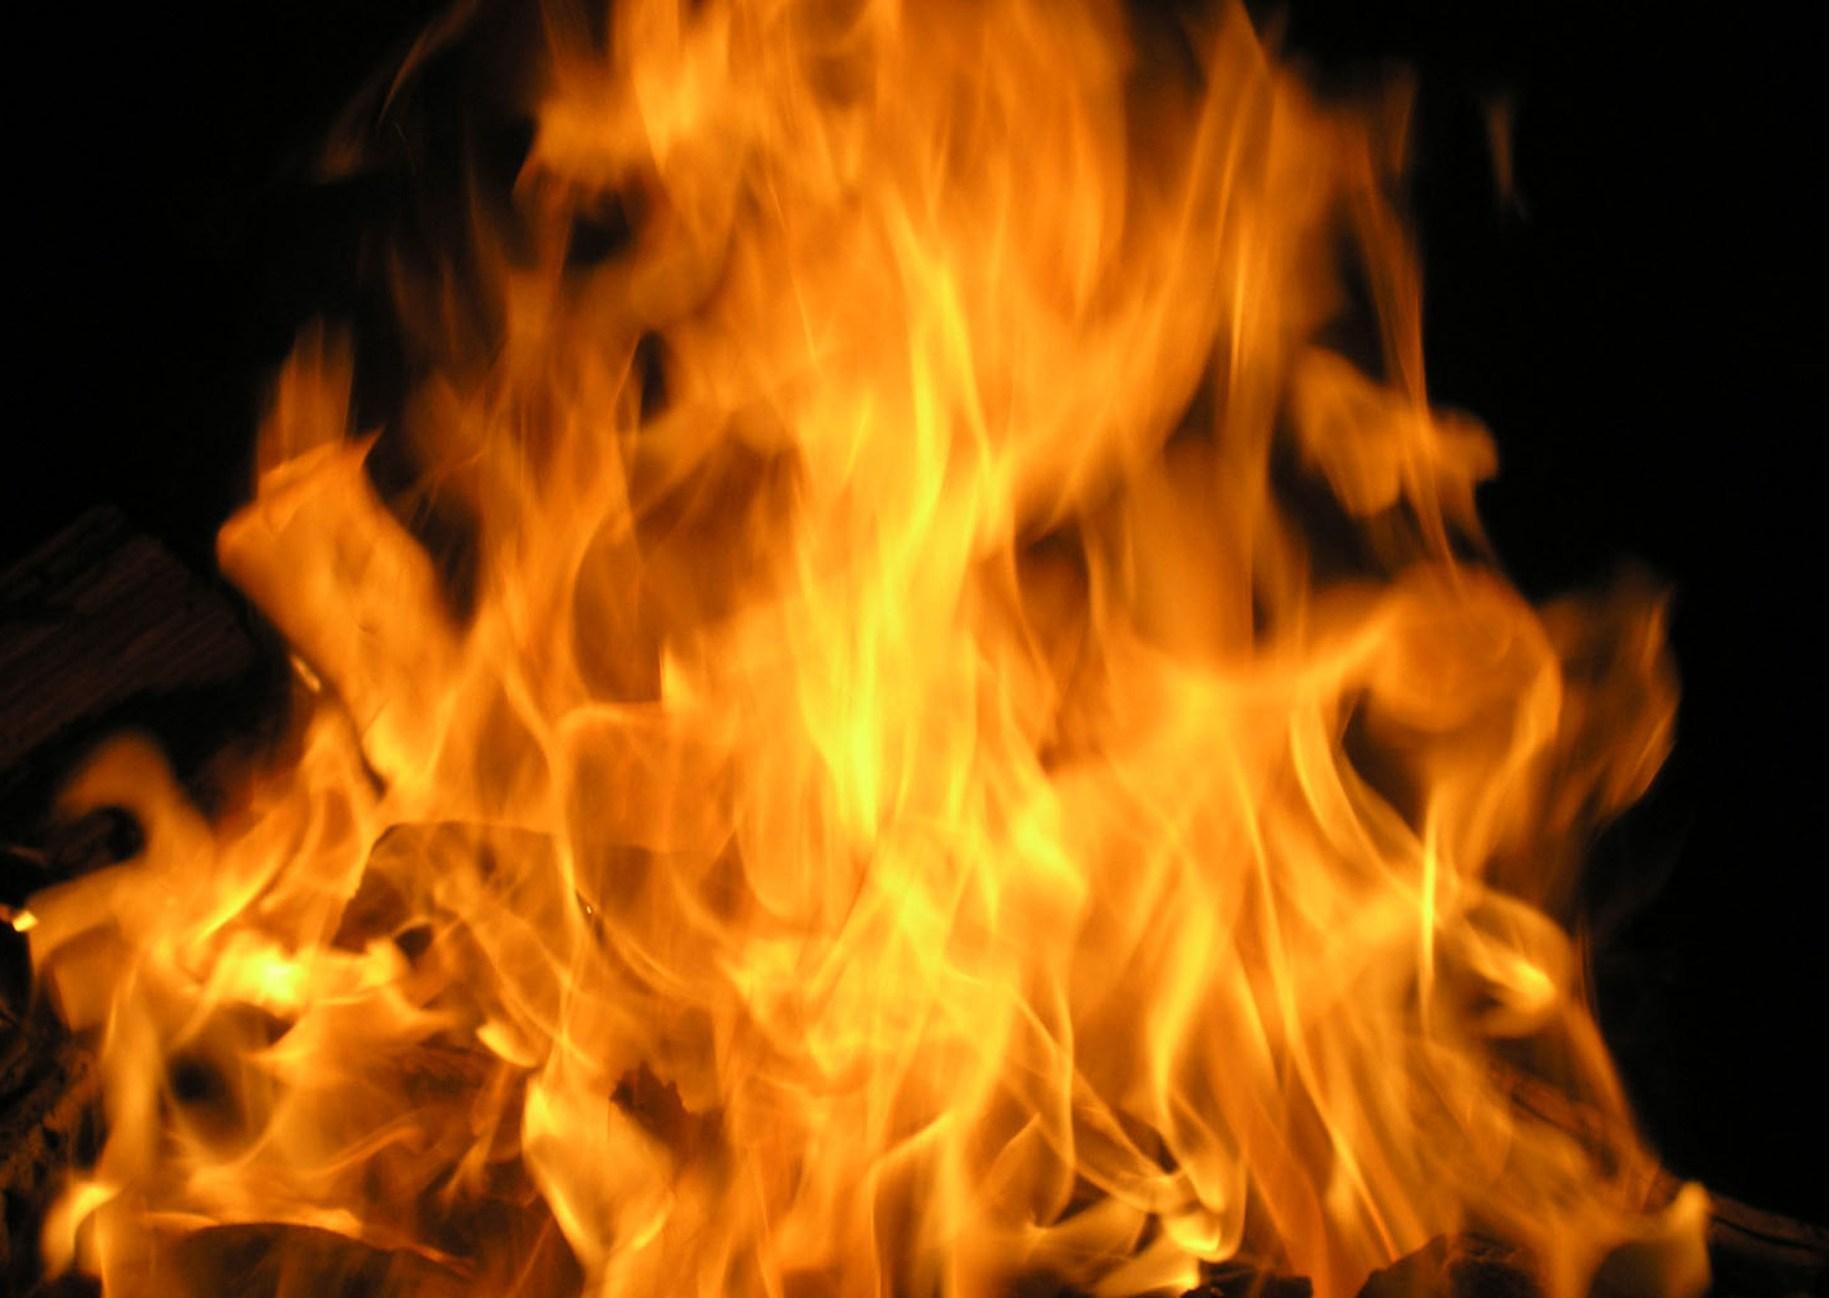 Fire flame in night free desktop background wallpaper image